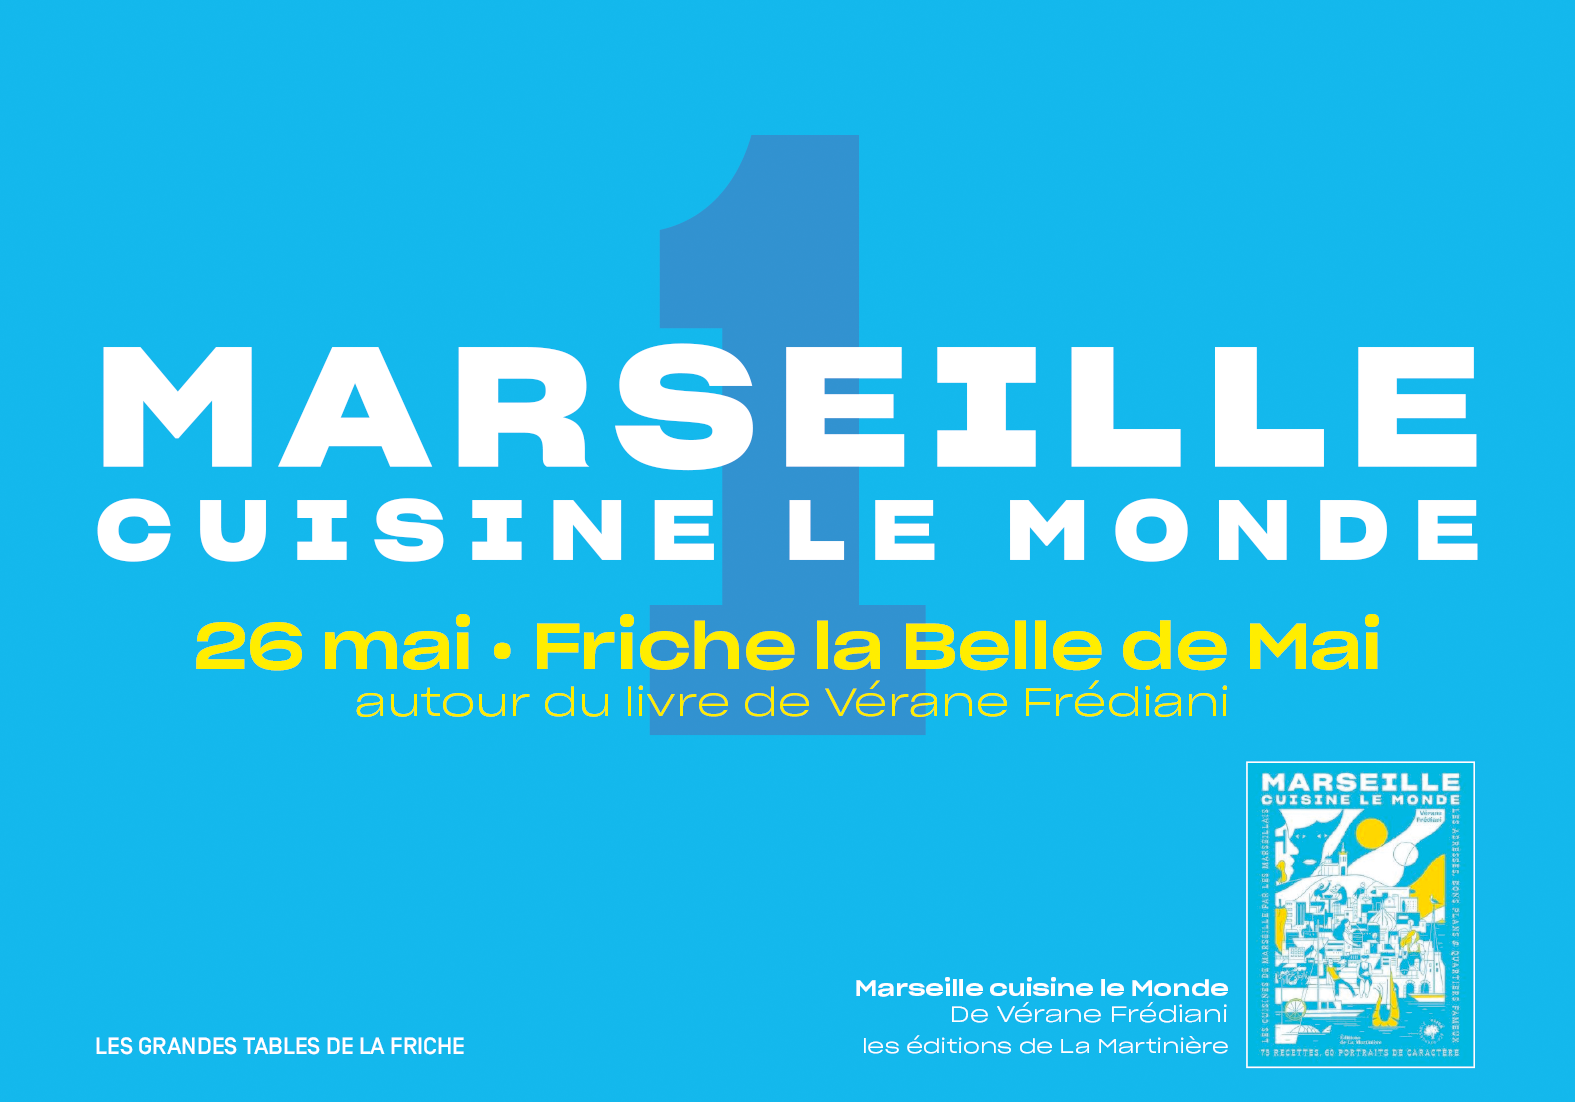 Marseille cuisine le monde #1